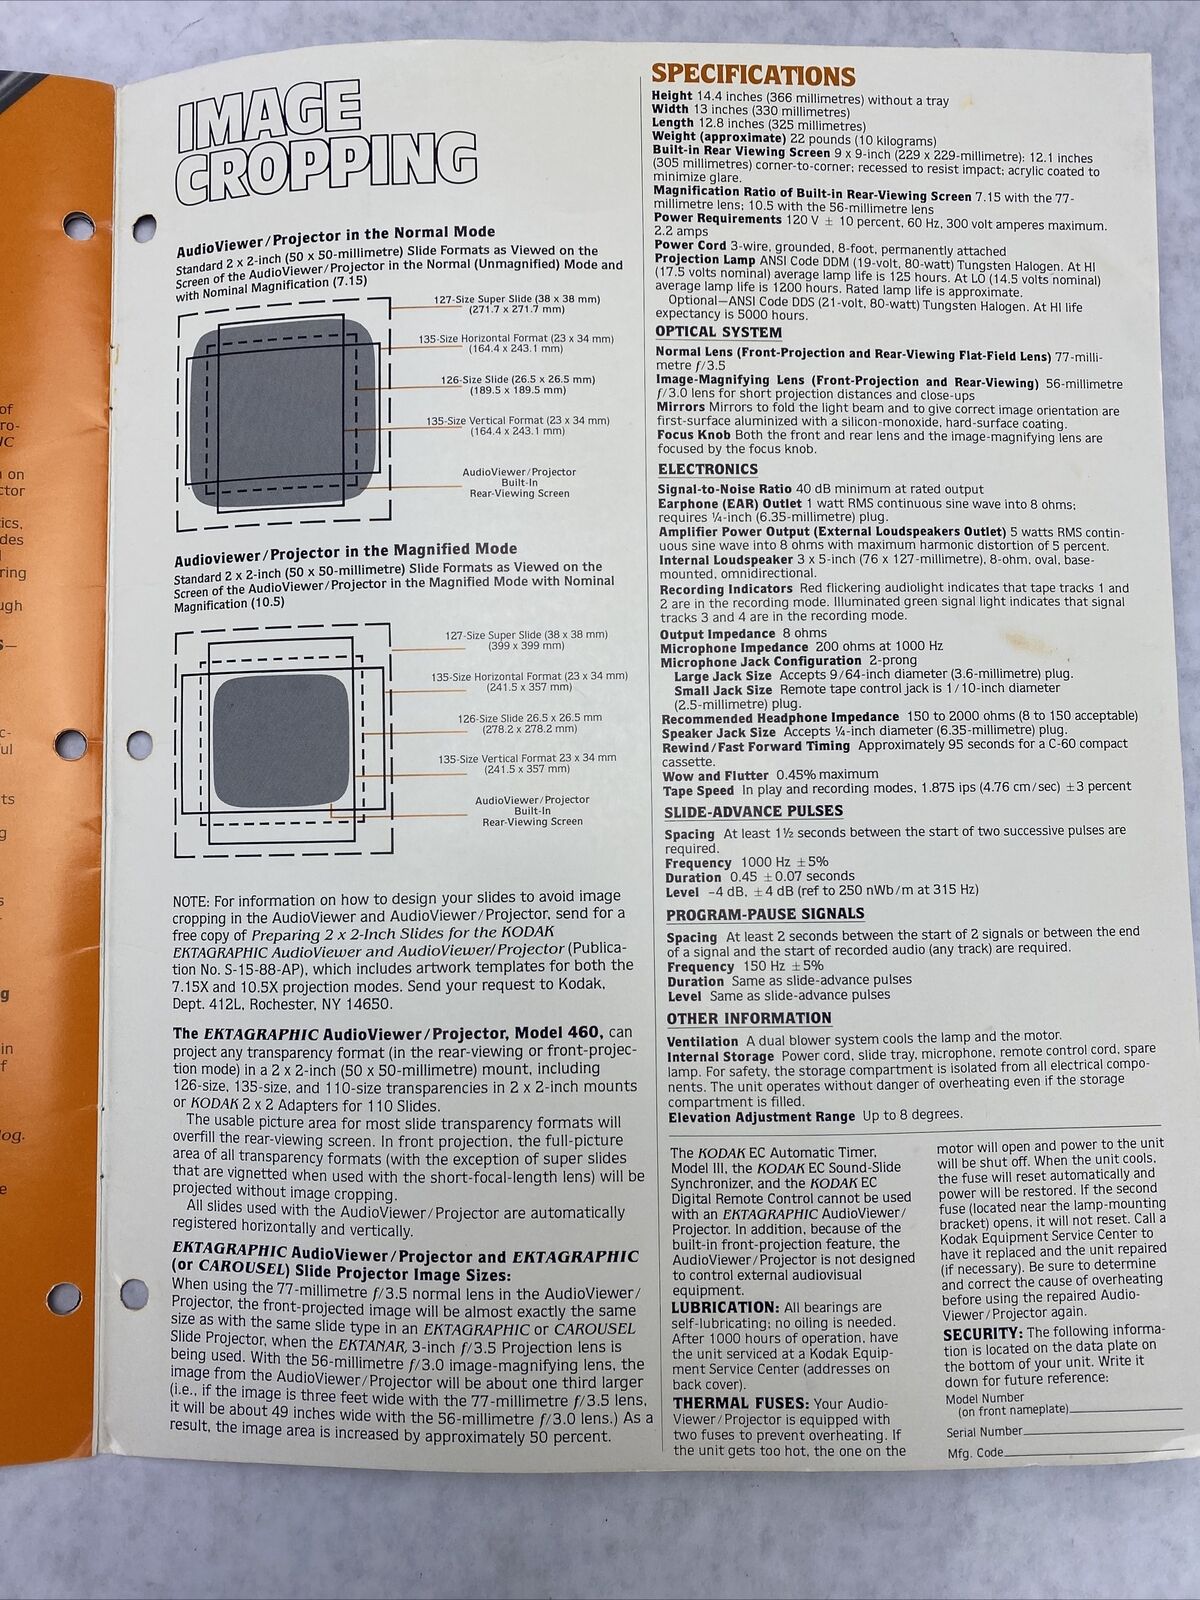 Kodak Ektagraphic 460 Slide Projector Operating Instructions Manual